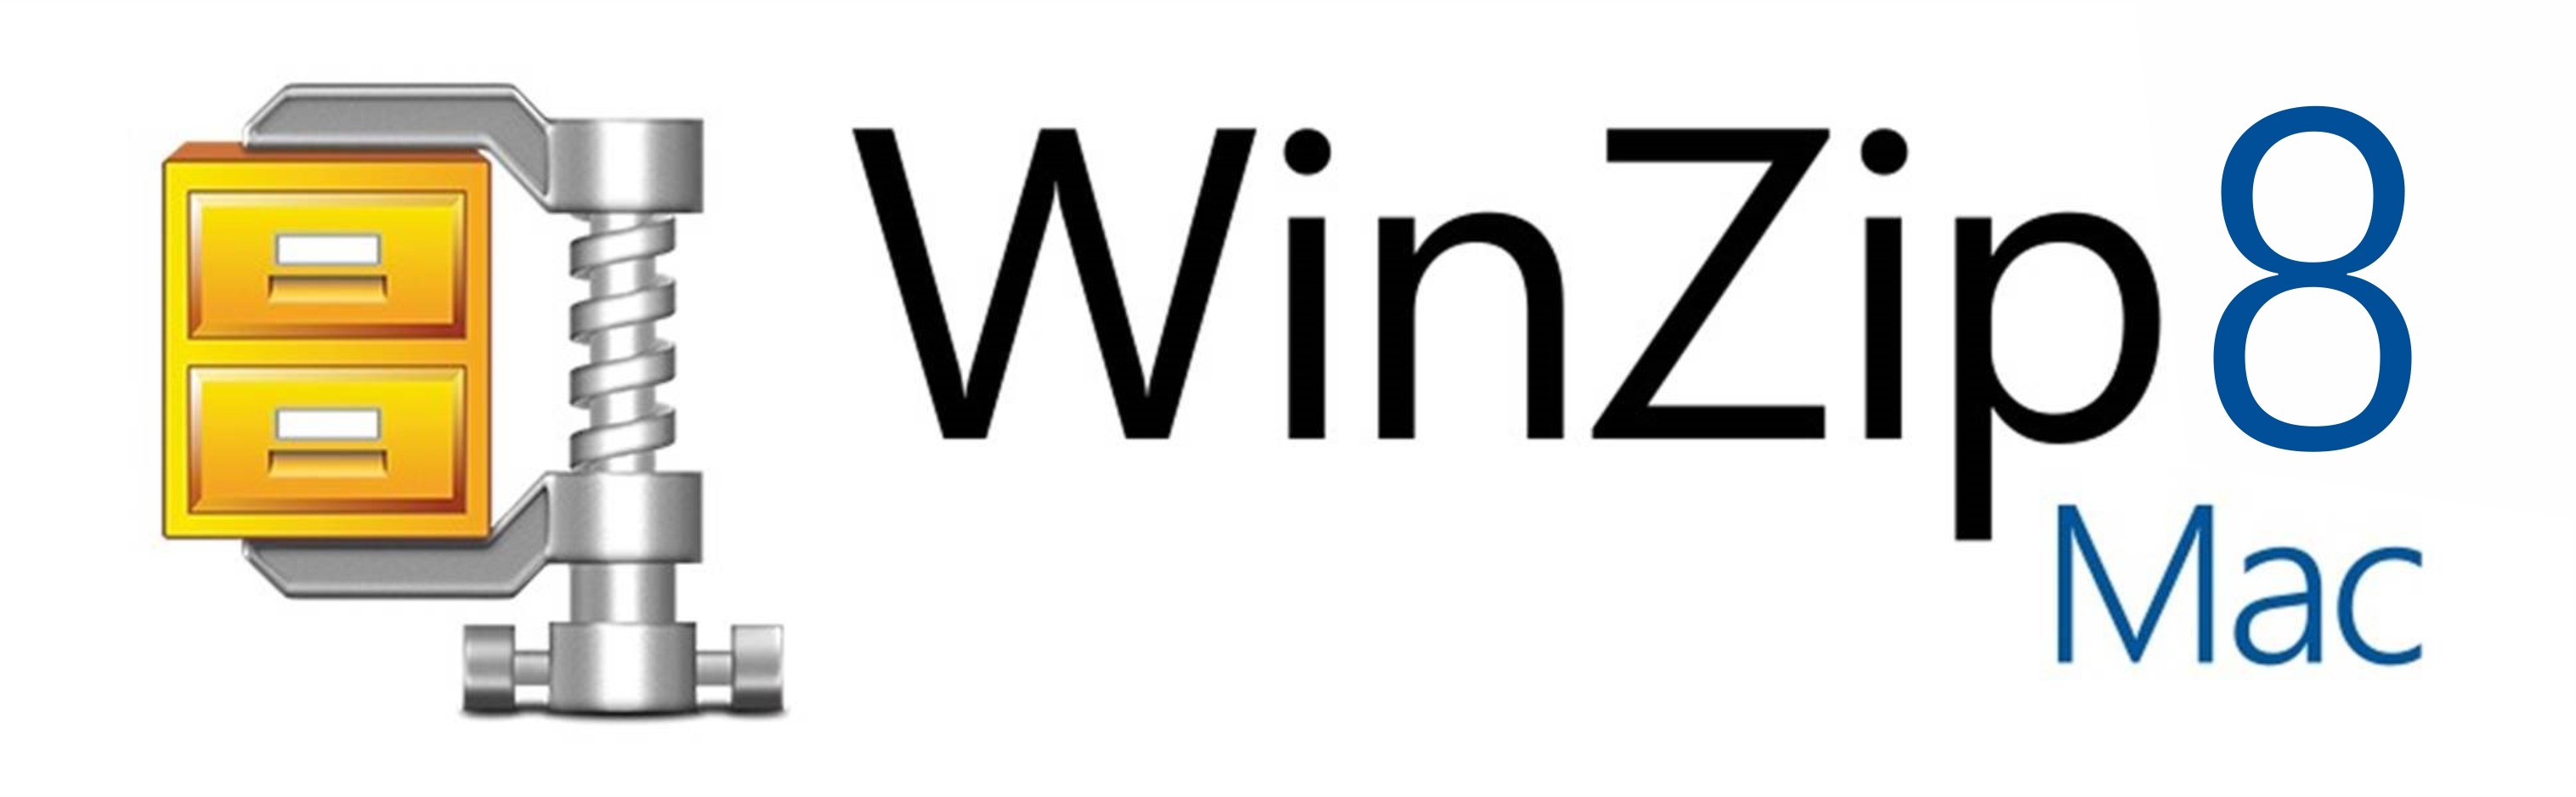 winzip 8 download freeware